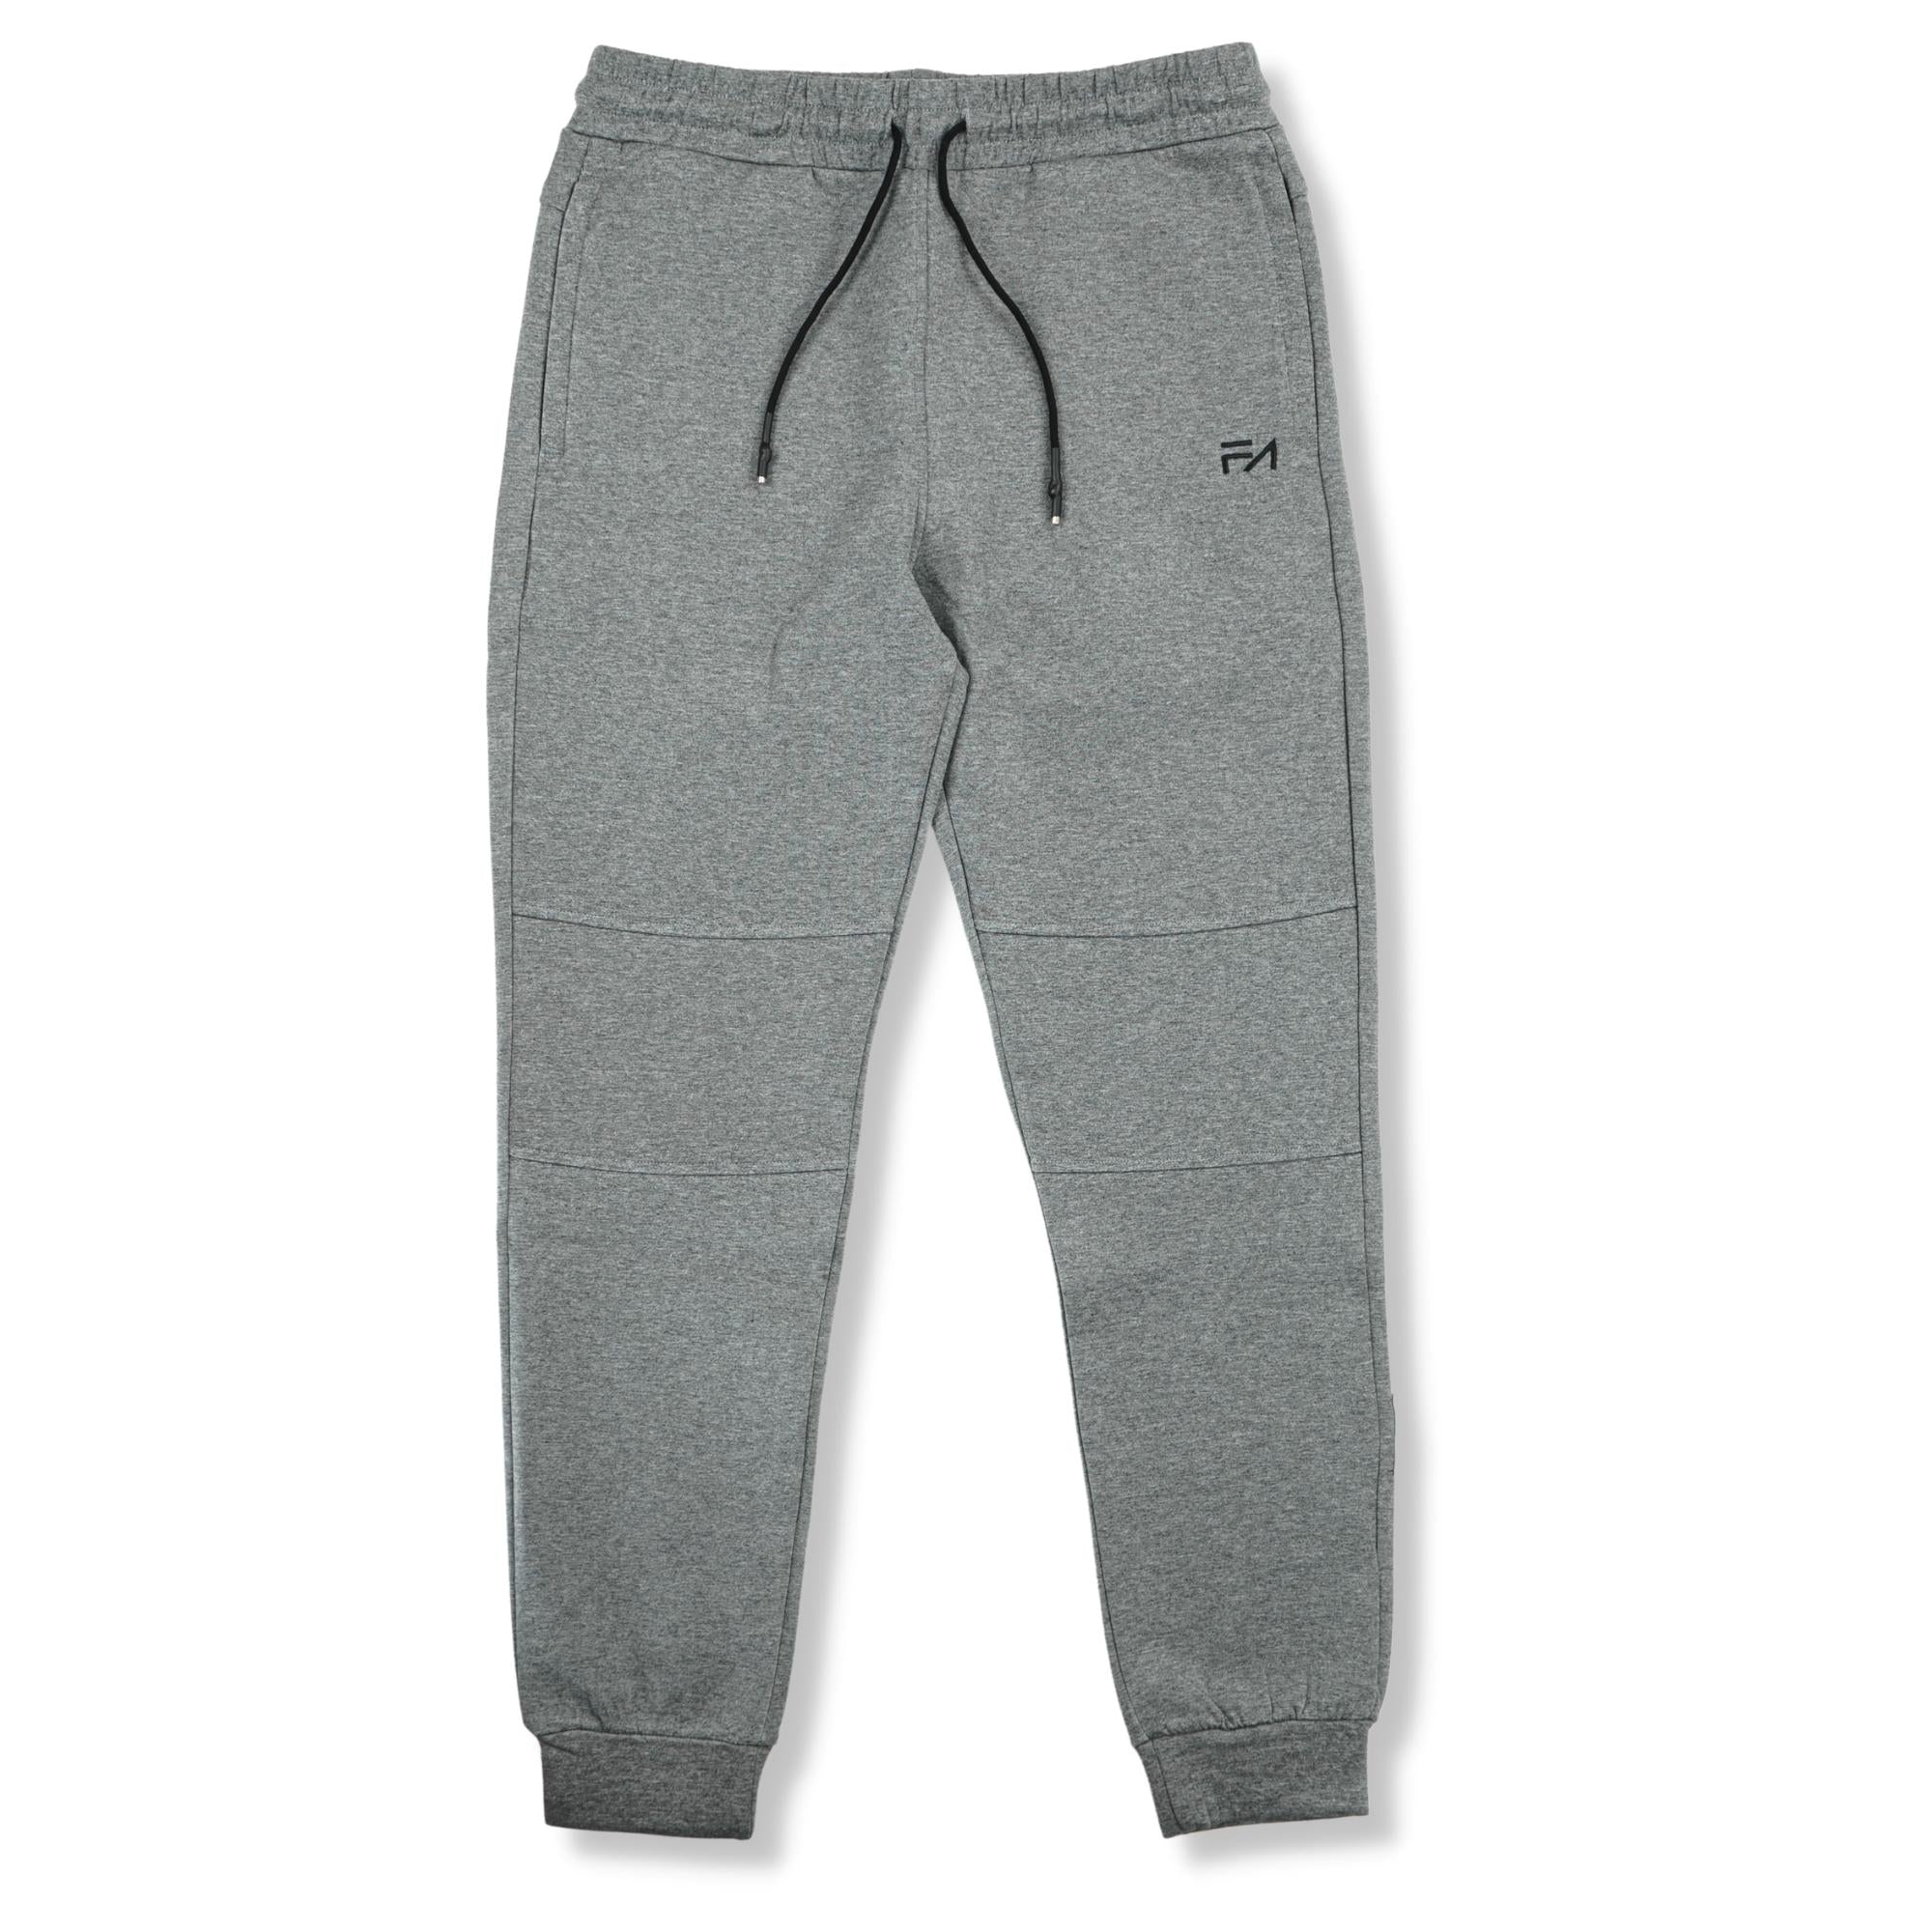 Flex Suit Cross Training Sweat Suit-Joggers(Grey)